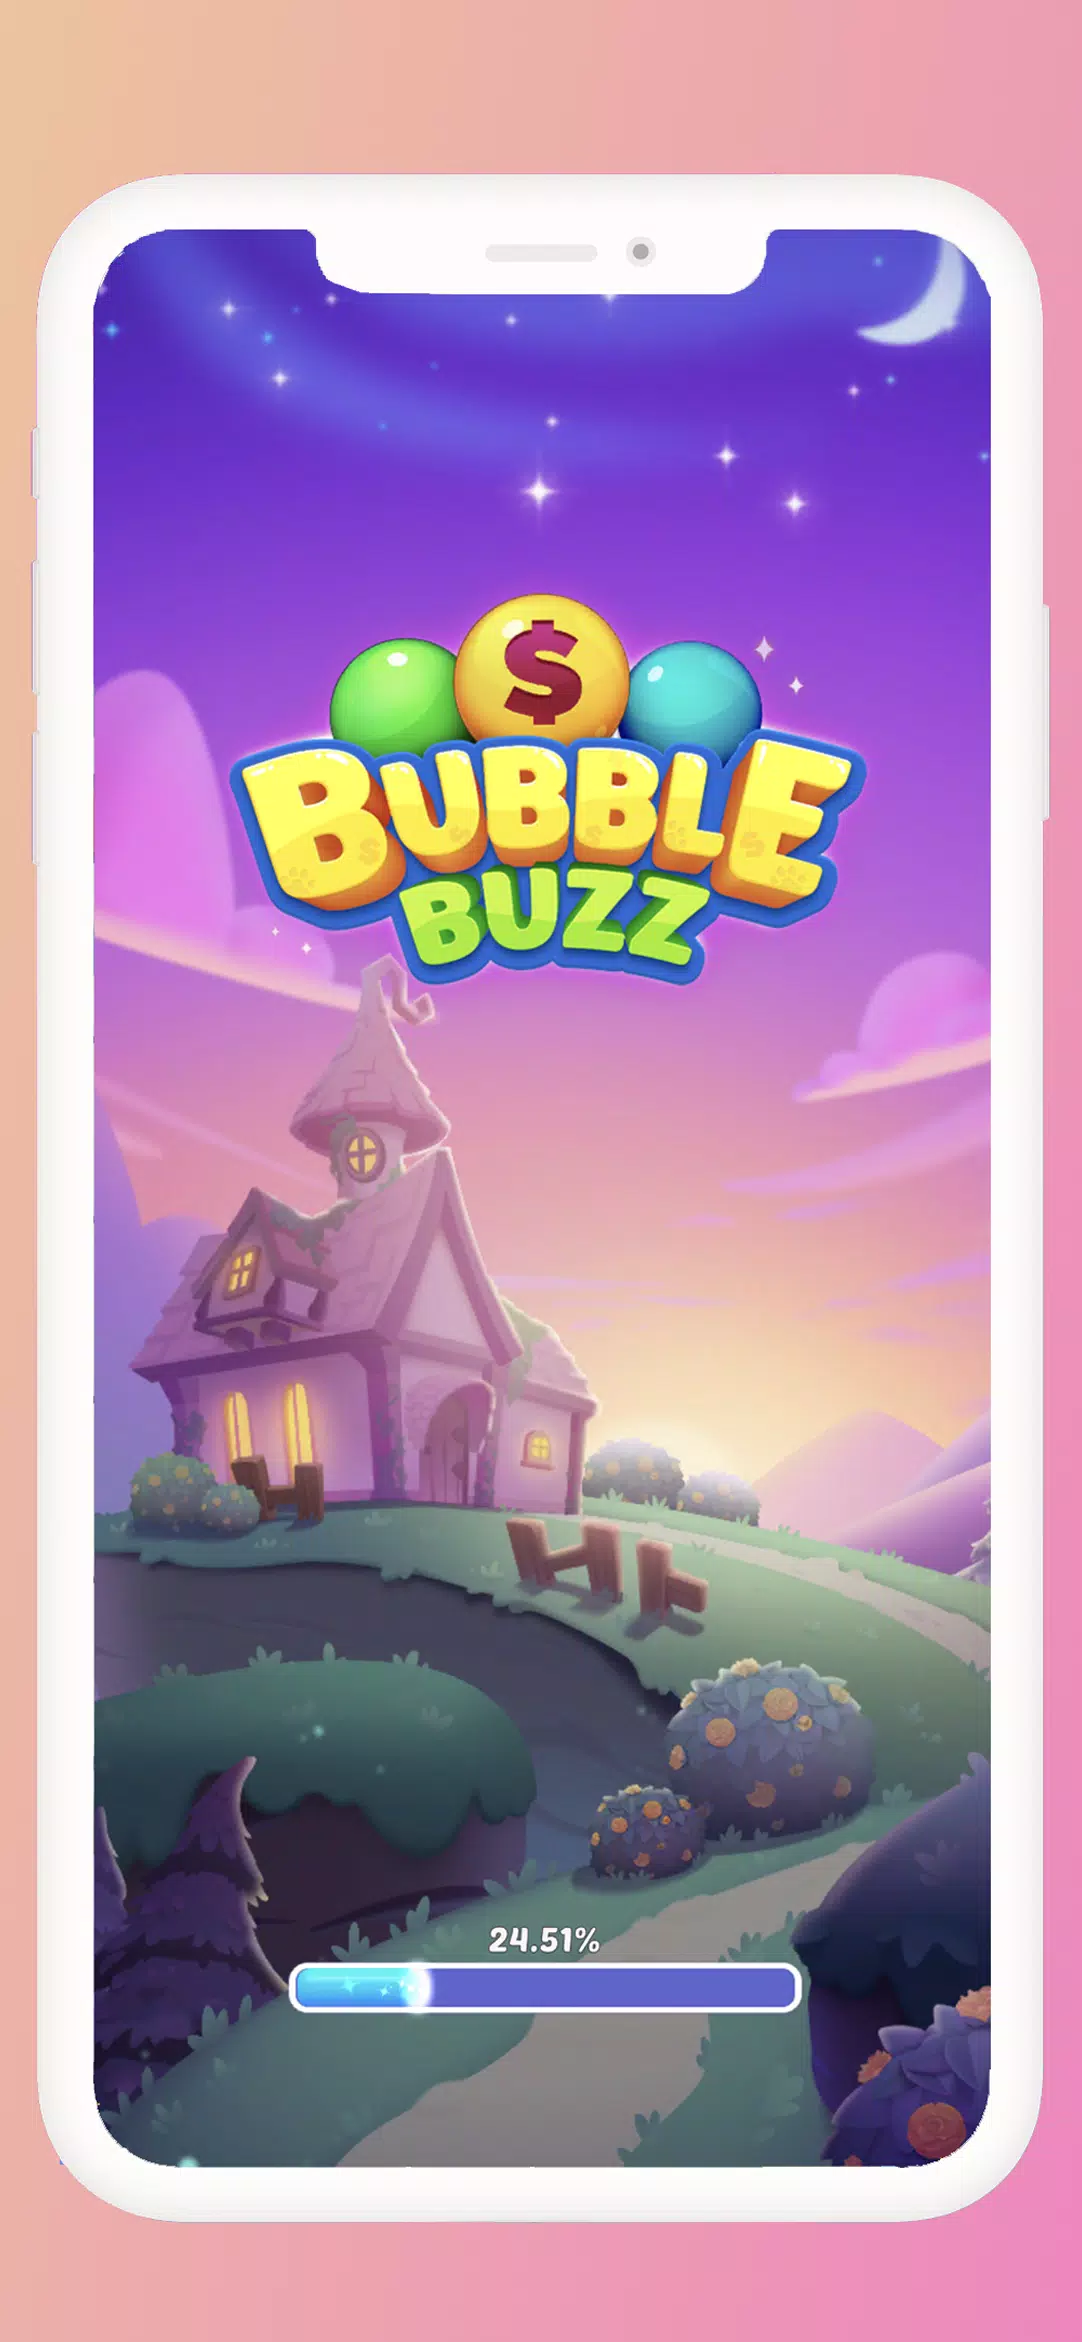 AviaGames Announces New Bubble Buzz Mobile Game